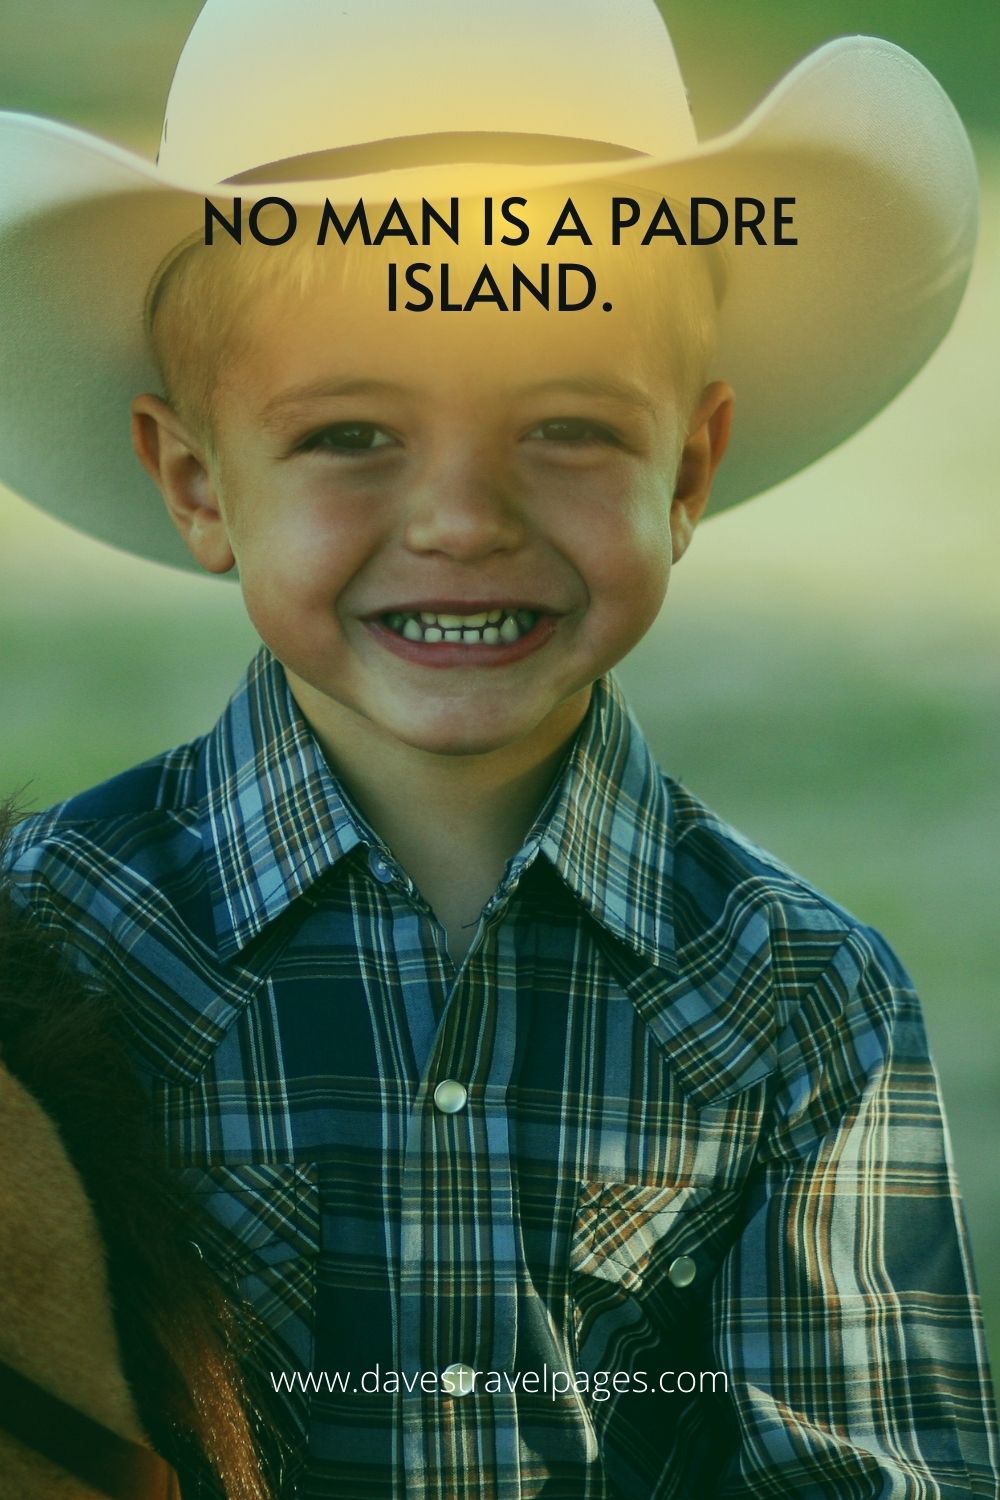 No man is a padre island